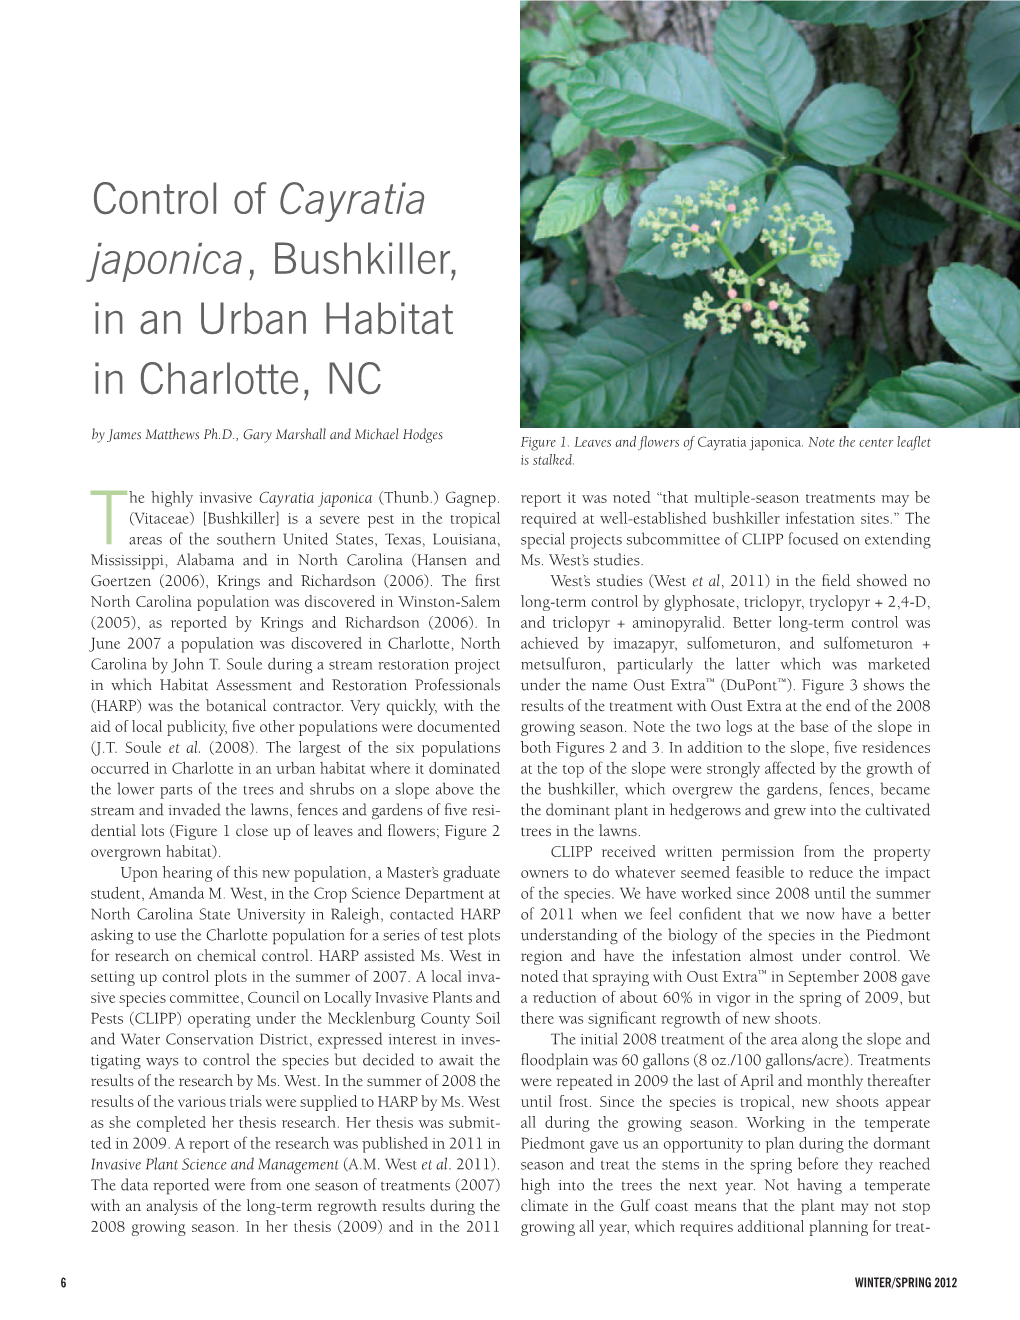 Control of Cayratia Japonica, Bushkiller, in an Urban Habitat in Charlotte, NC